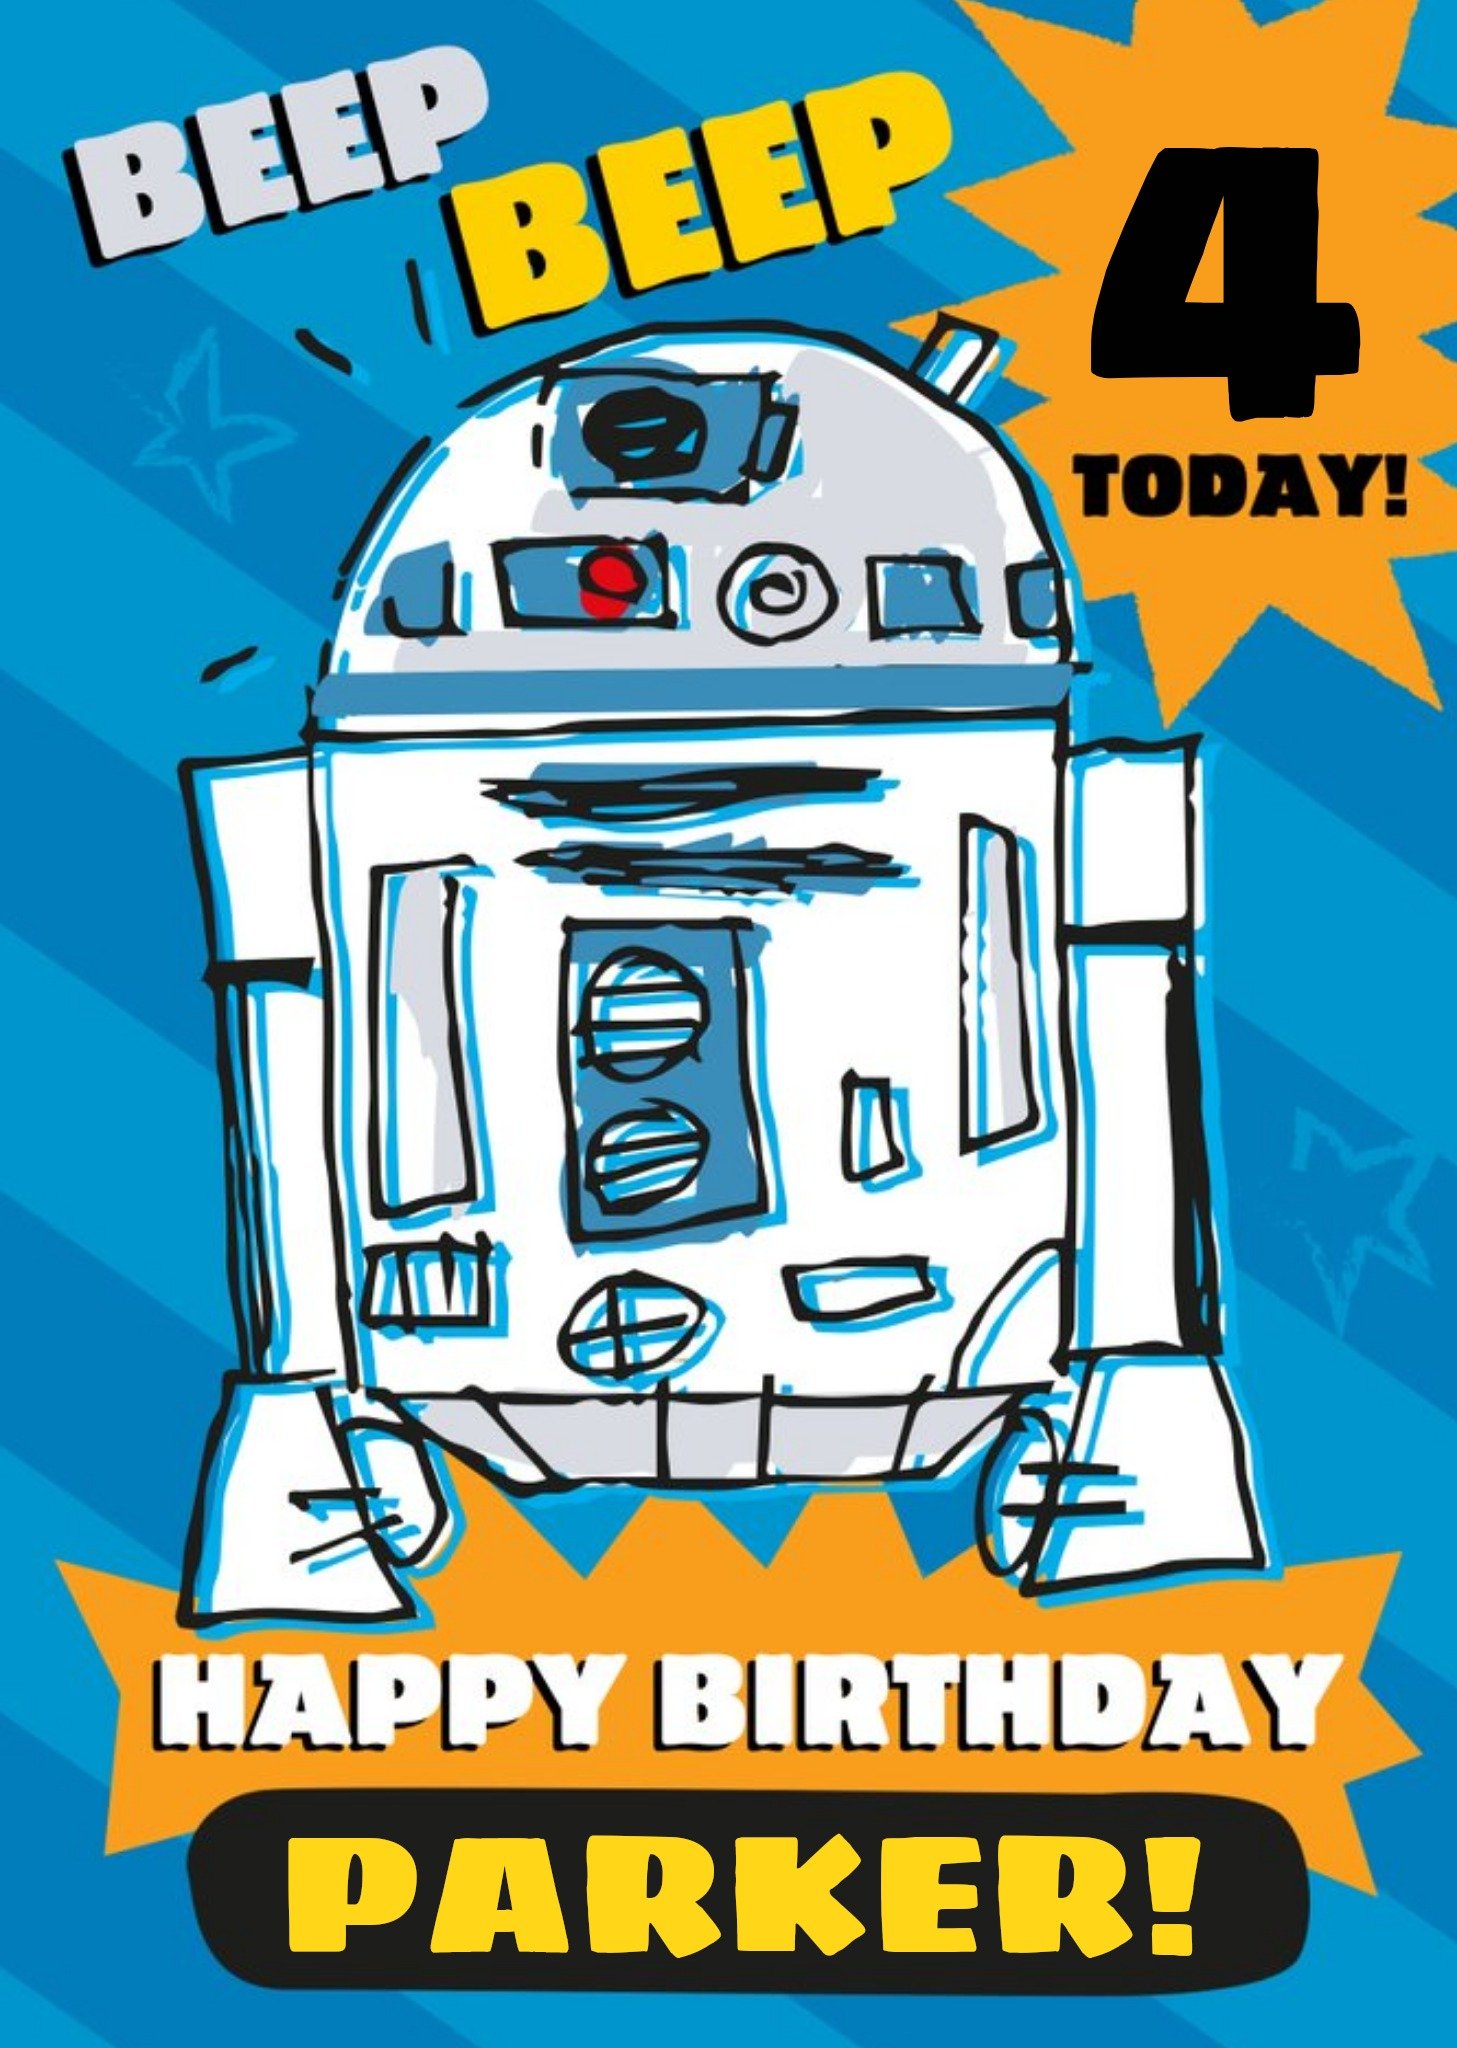 Disney Star Wars R2D2 4 Today Kids Birthday Card, Large